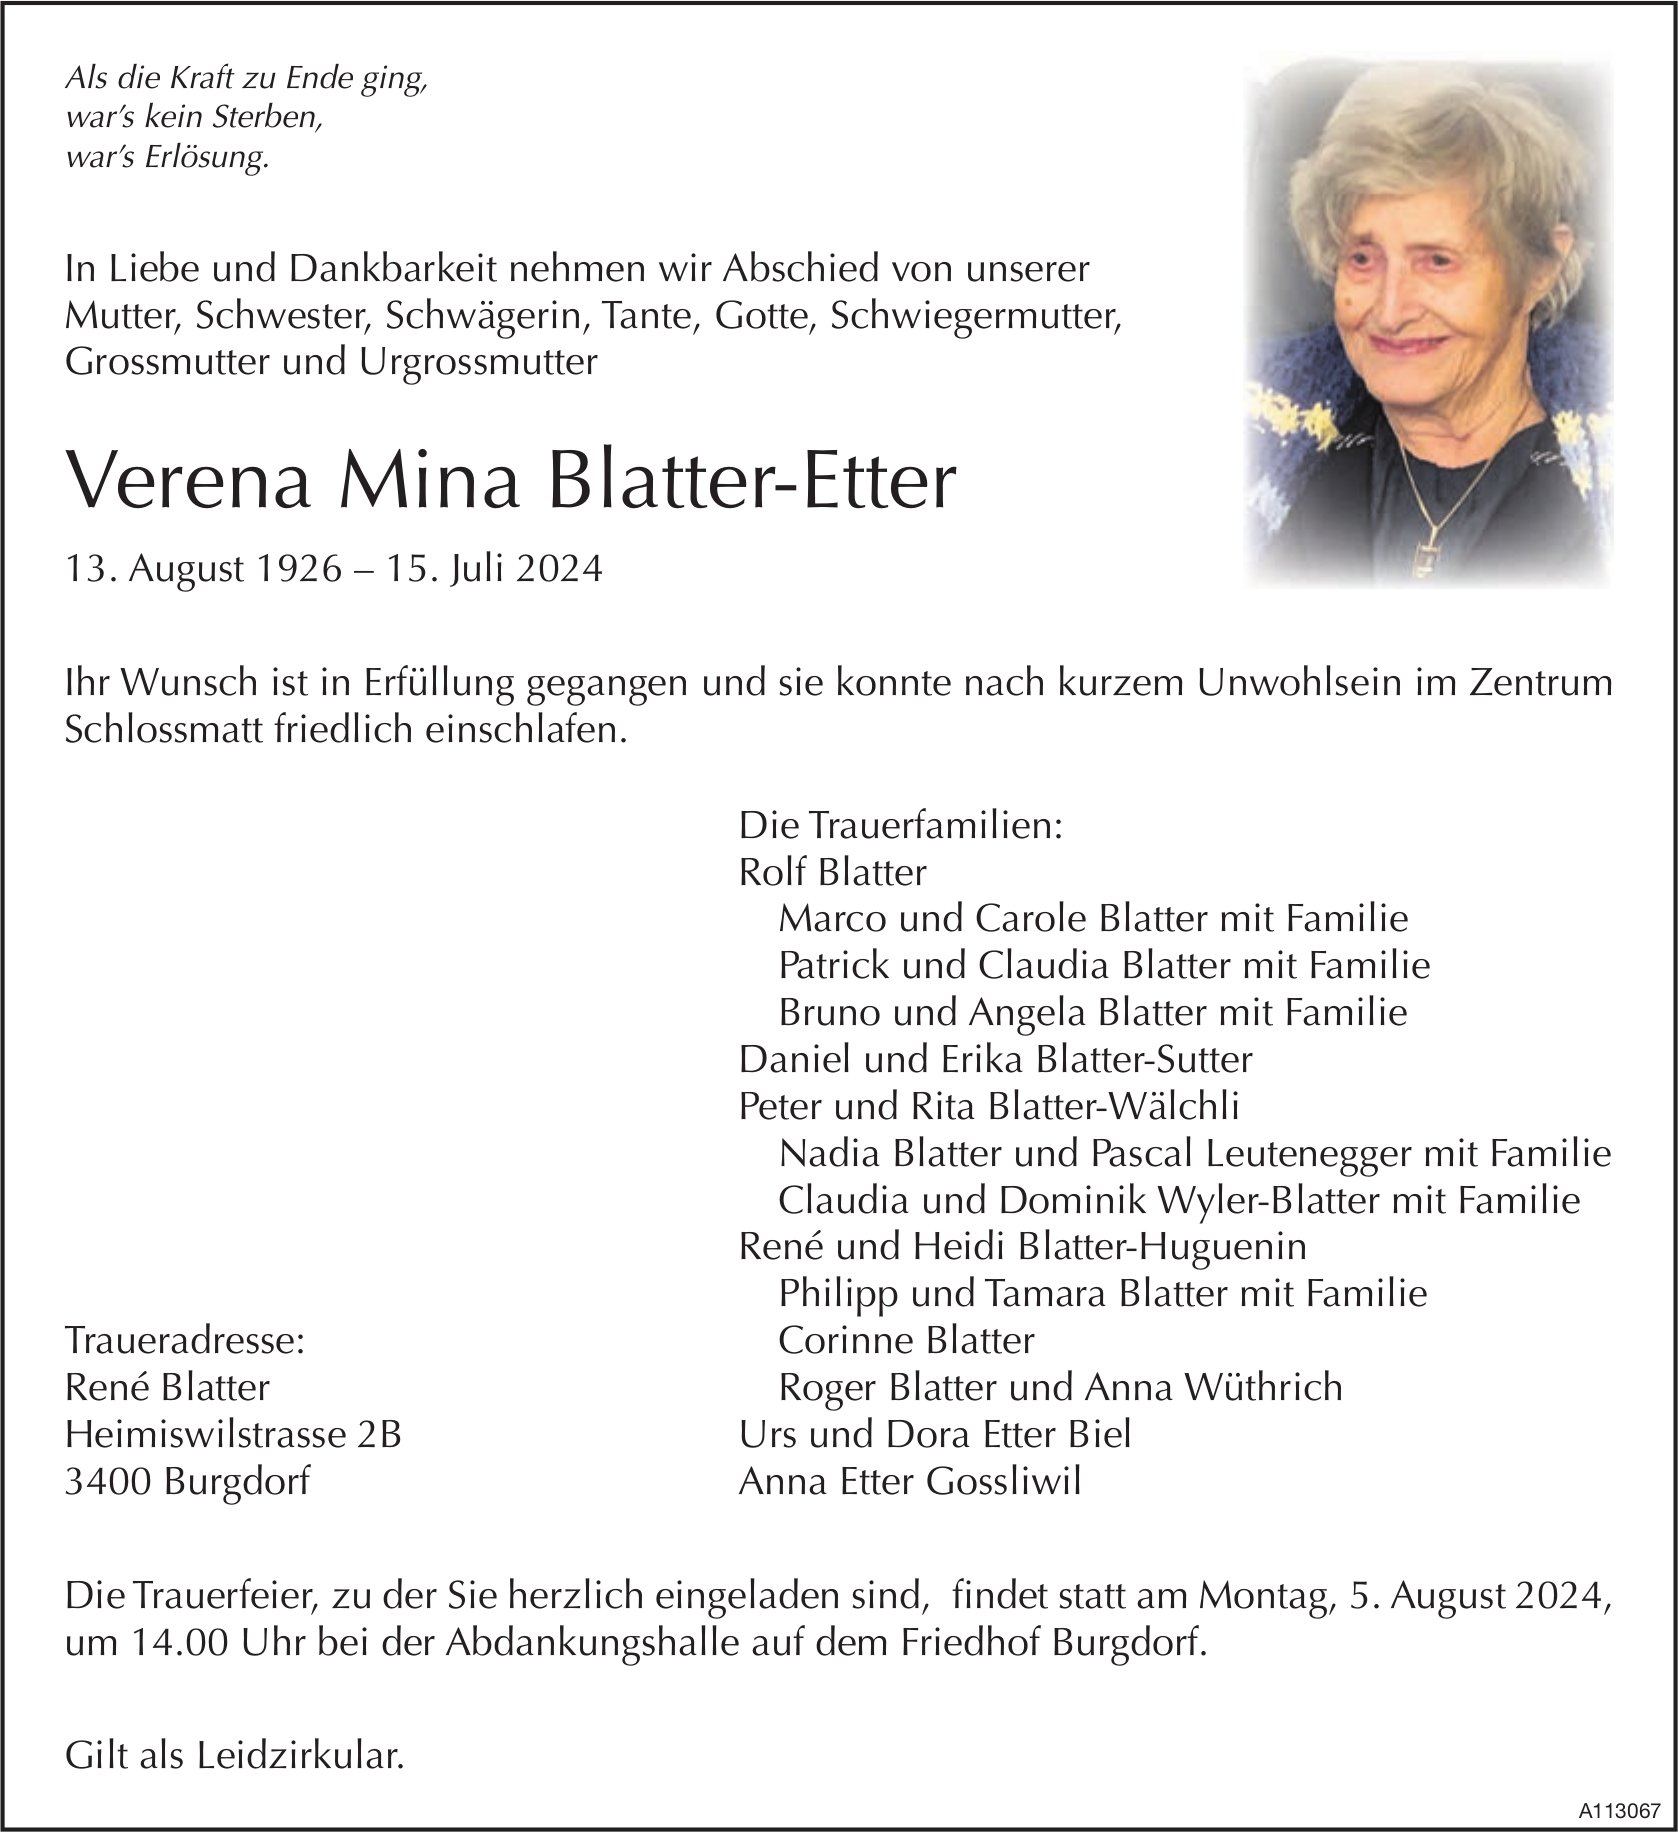 Verena Mina Blatter-Etter, Juli 2024 / TA